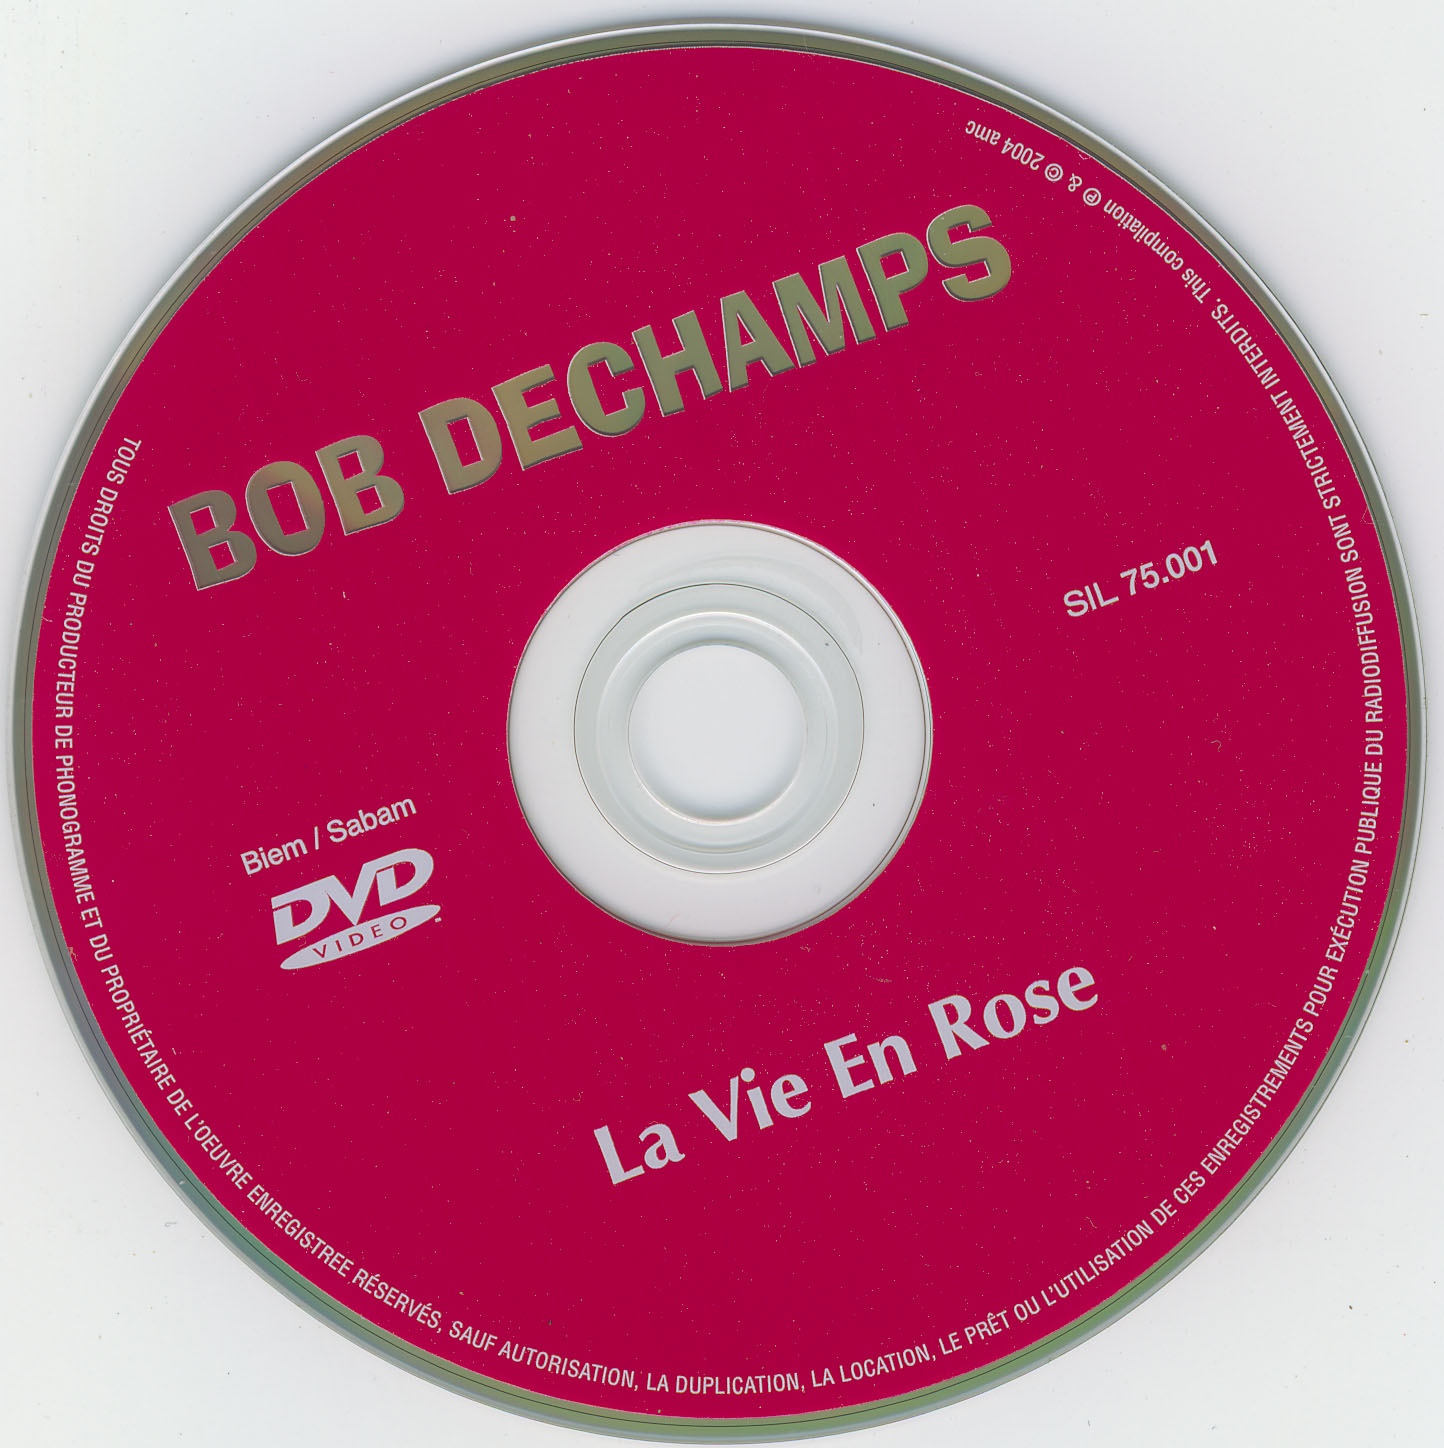 Bob Dechamps  La vie en rose